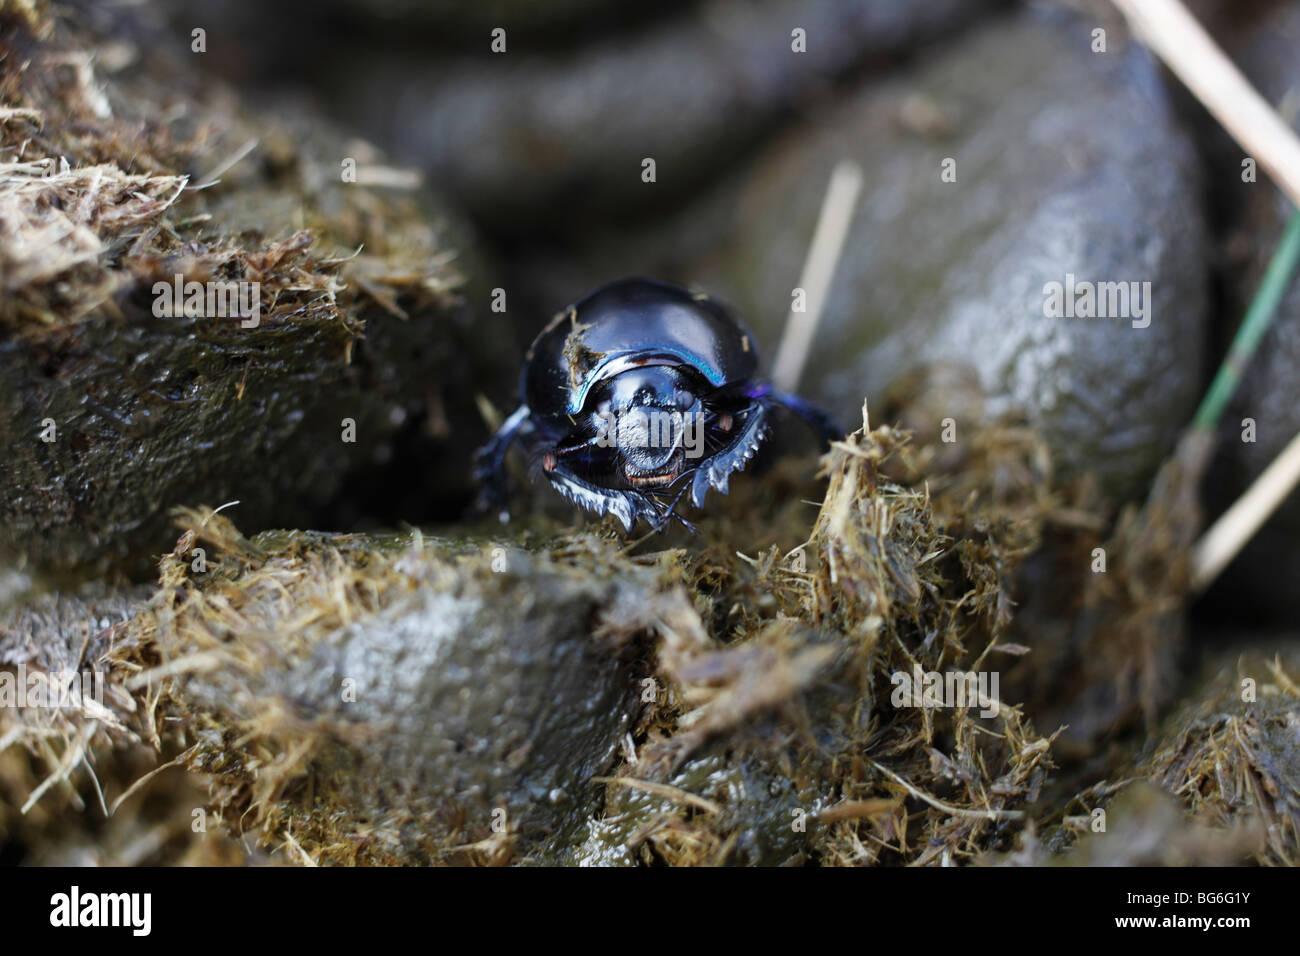 Dor escarabajo (geotropes stercorianus) alimentándose de estiércol de caballo vista lateral Foto de stock